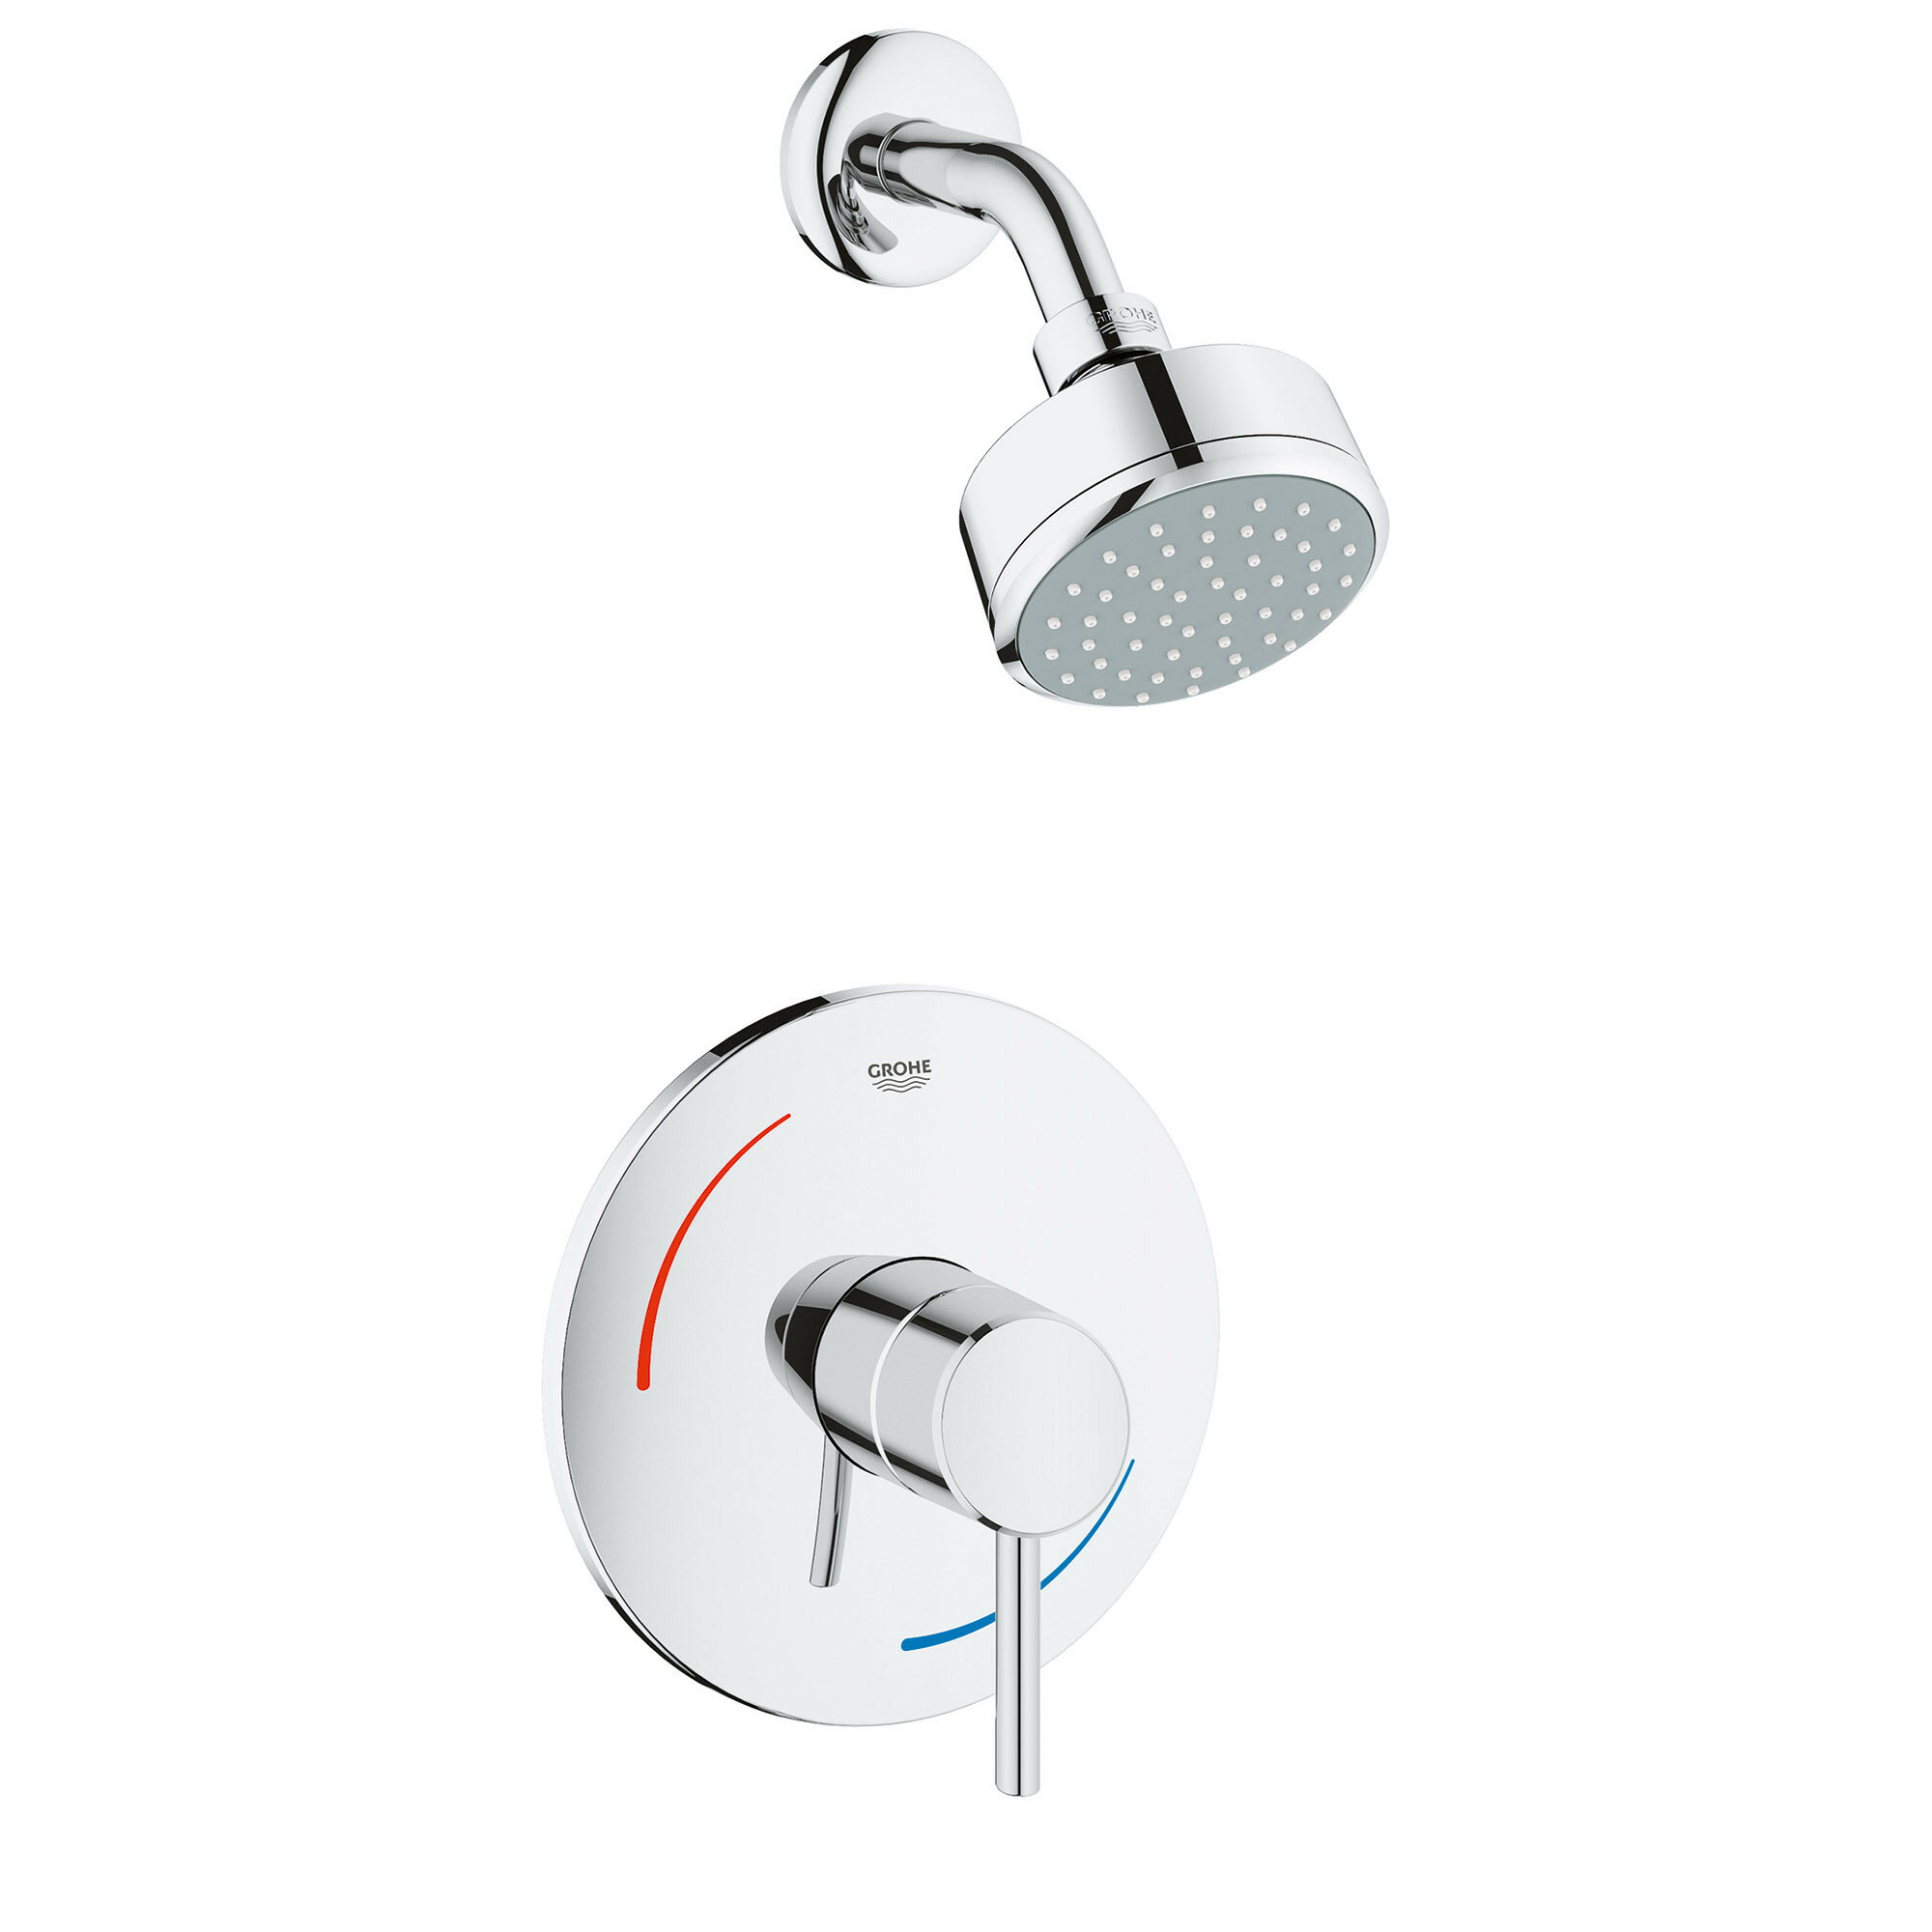 Grohe Concetto Temperature Control Shower Faucet Reviews Wayfair